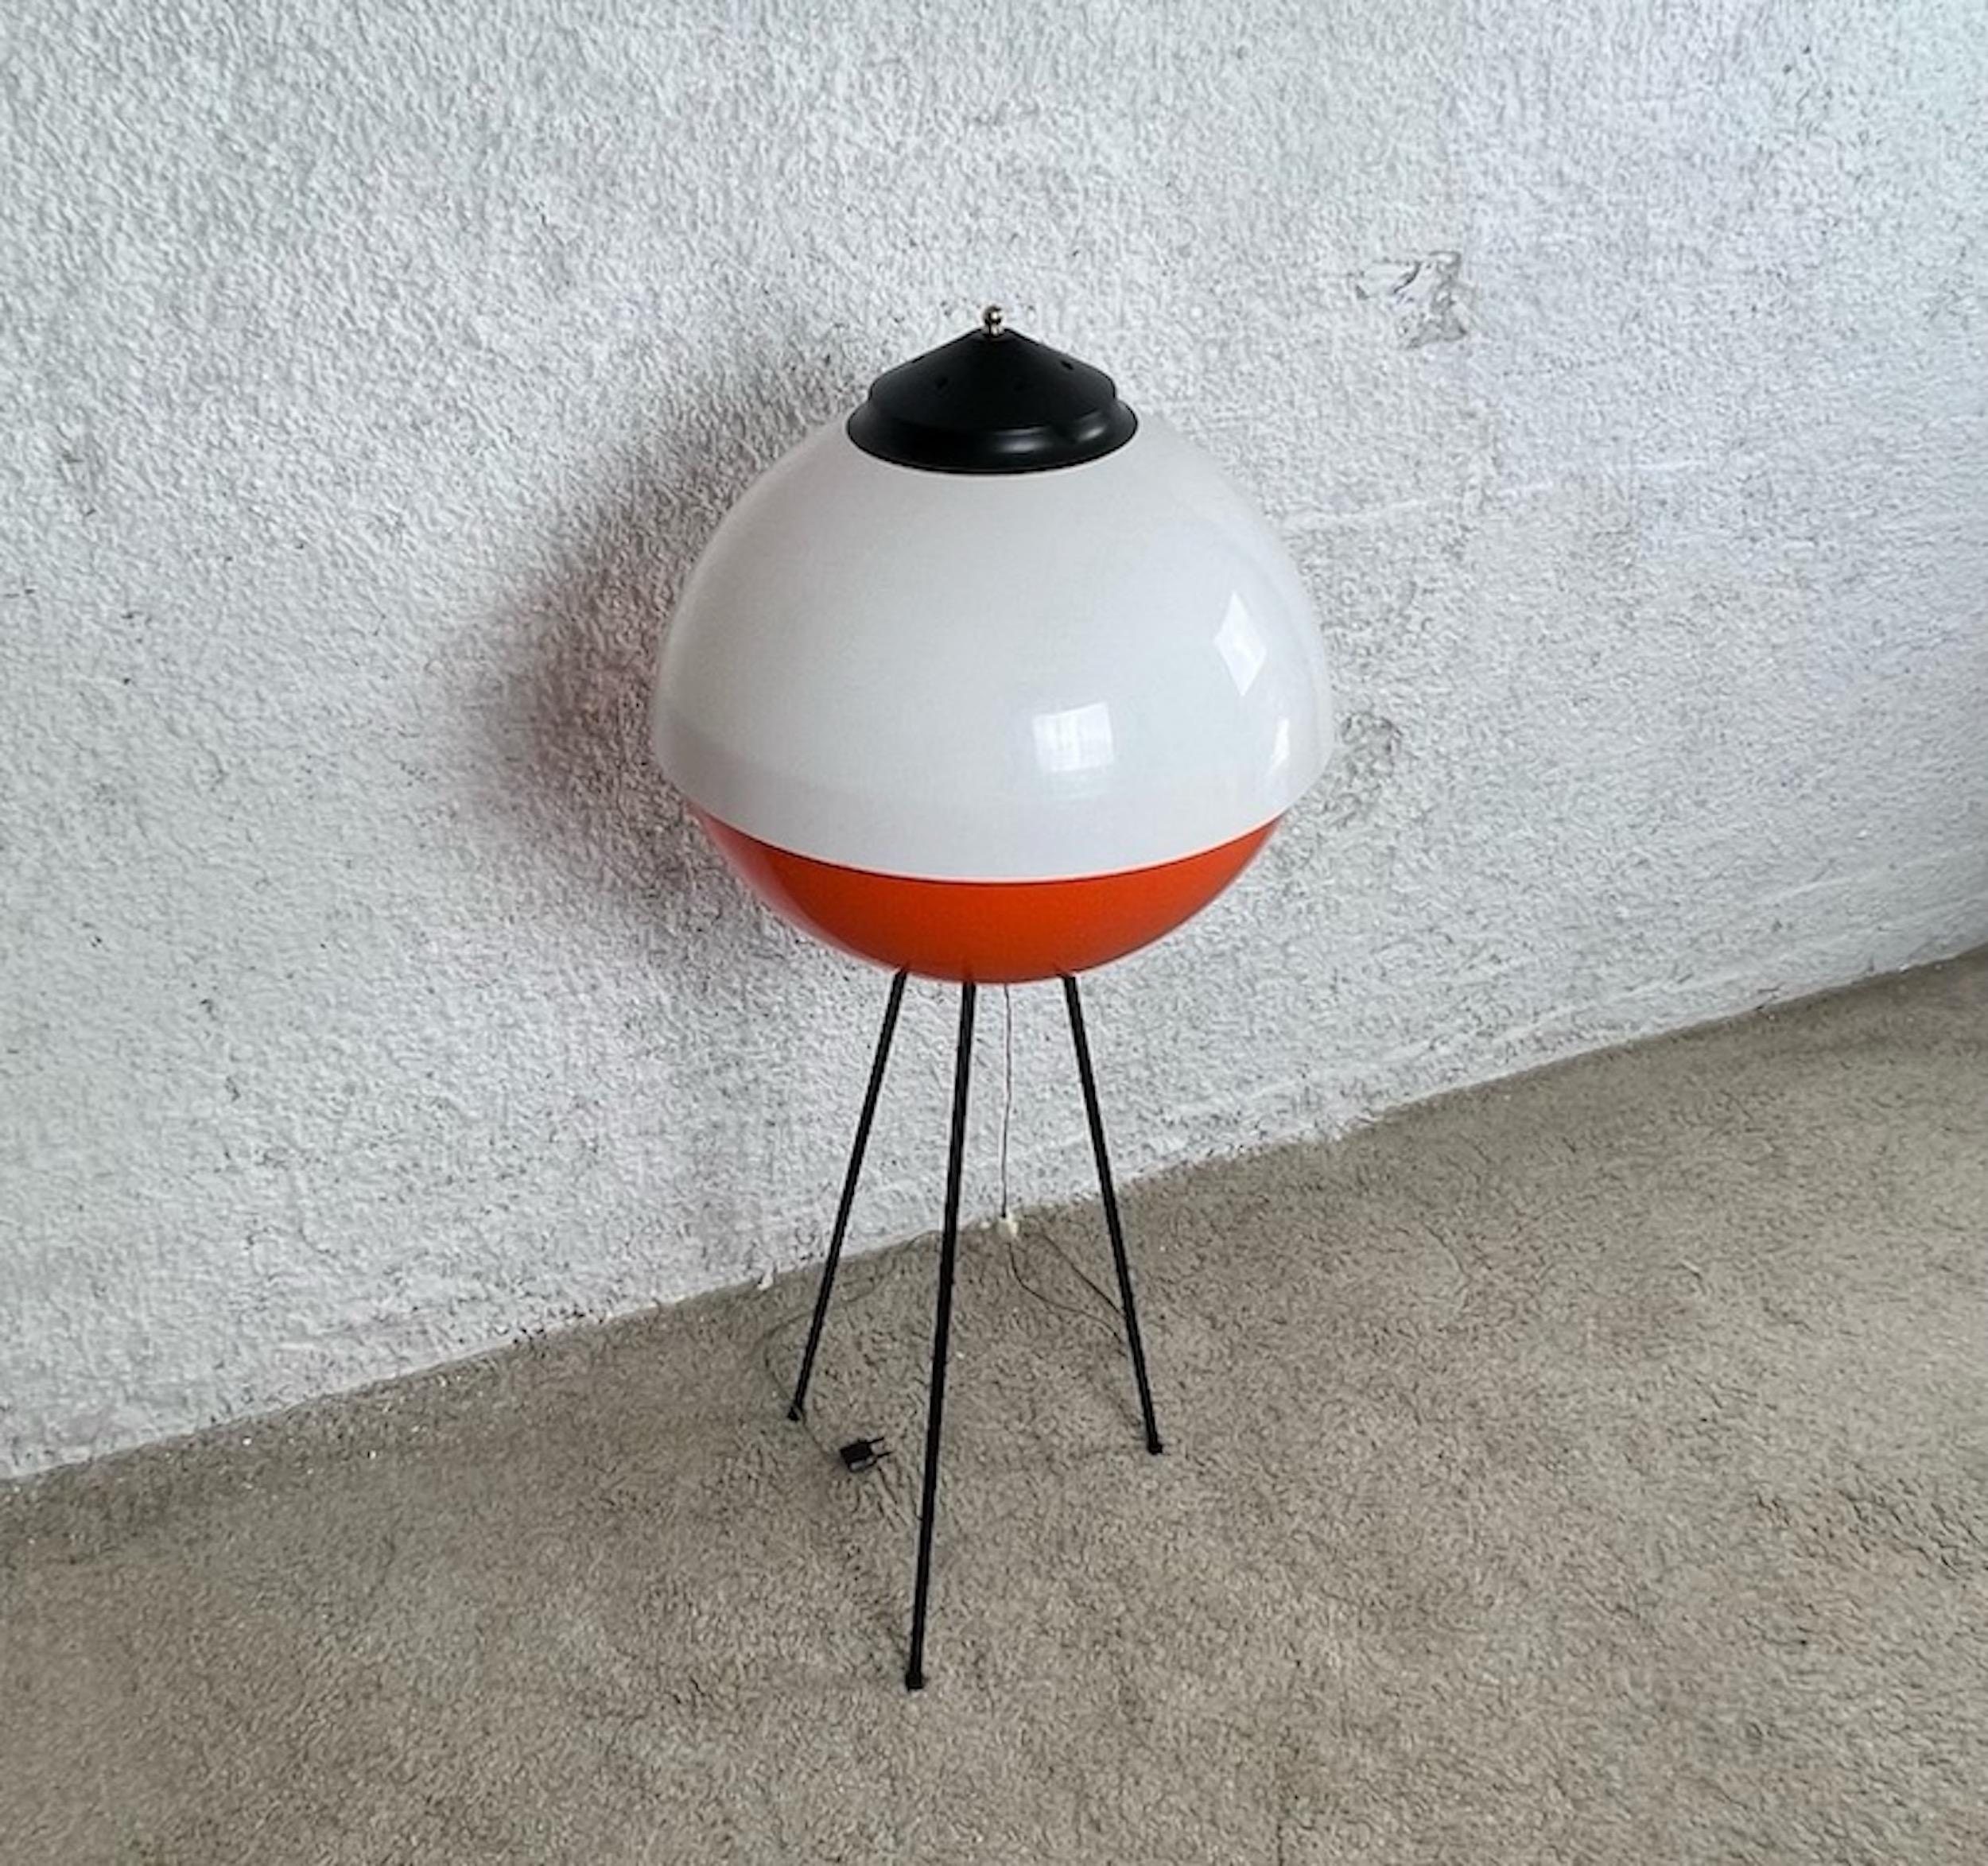 Large Space Age Tripod Floor Lamp, 60s - Italian UFO Lamp Stilnovo Style For Sale 3